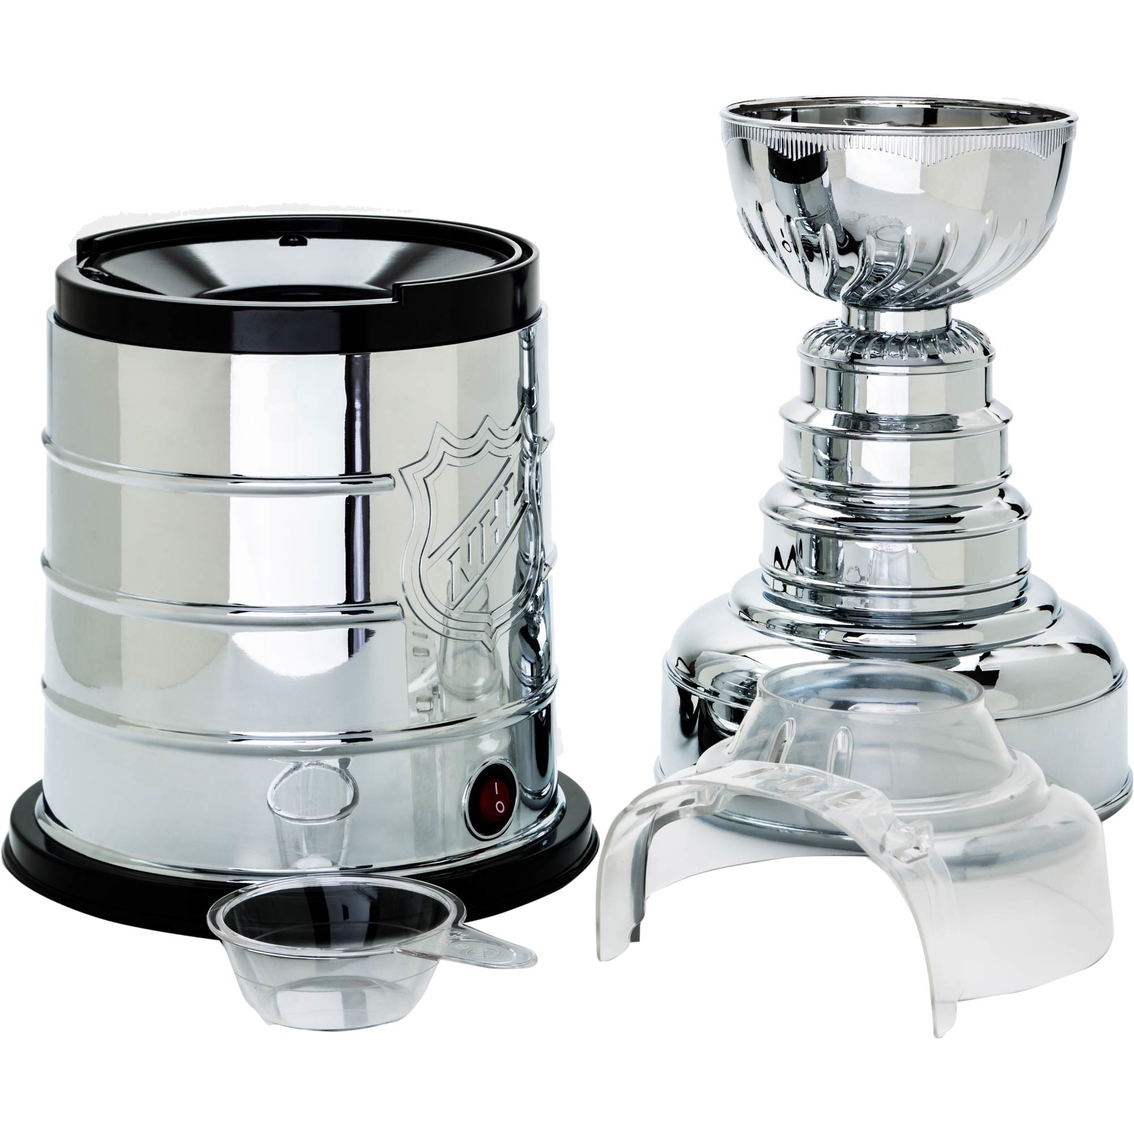 Stanley Cup Popcorn Maker - Image 3 of 4